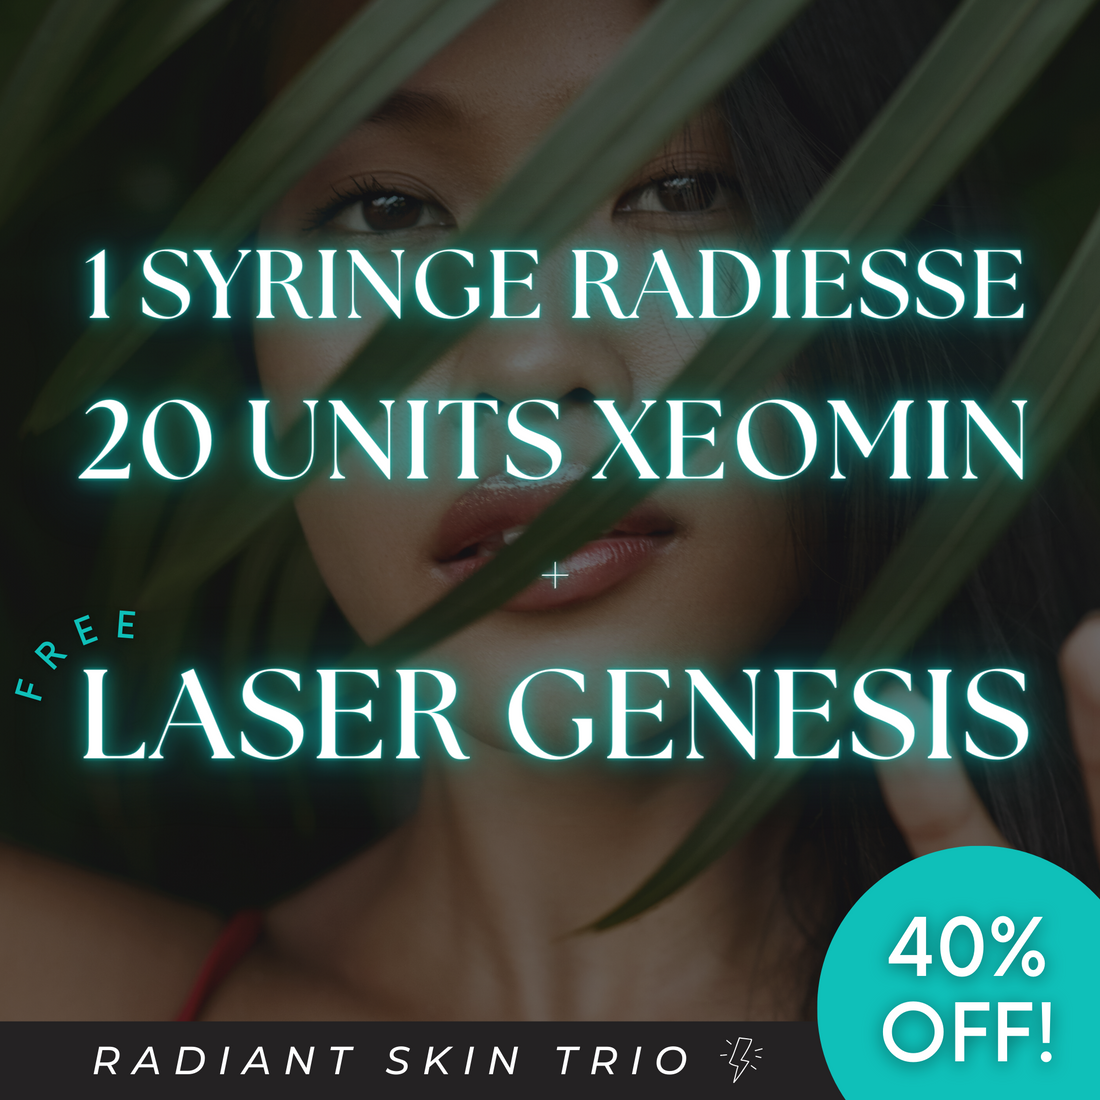 1 Syringe Radiesse, 20 Units Xeomin + FREE Laser Genesis Treatment